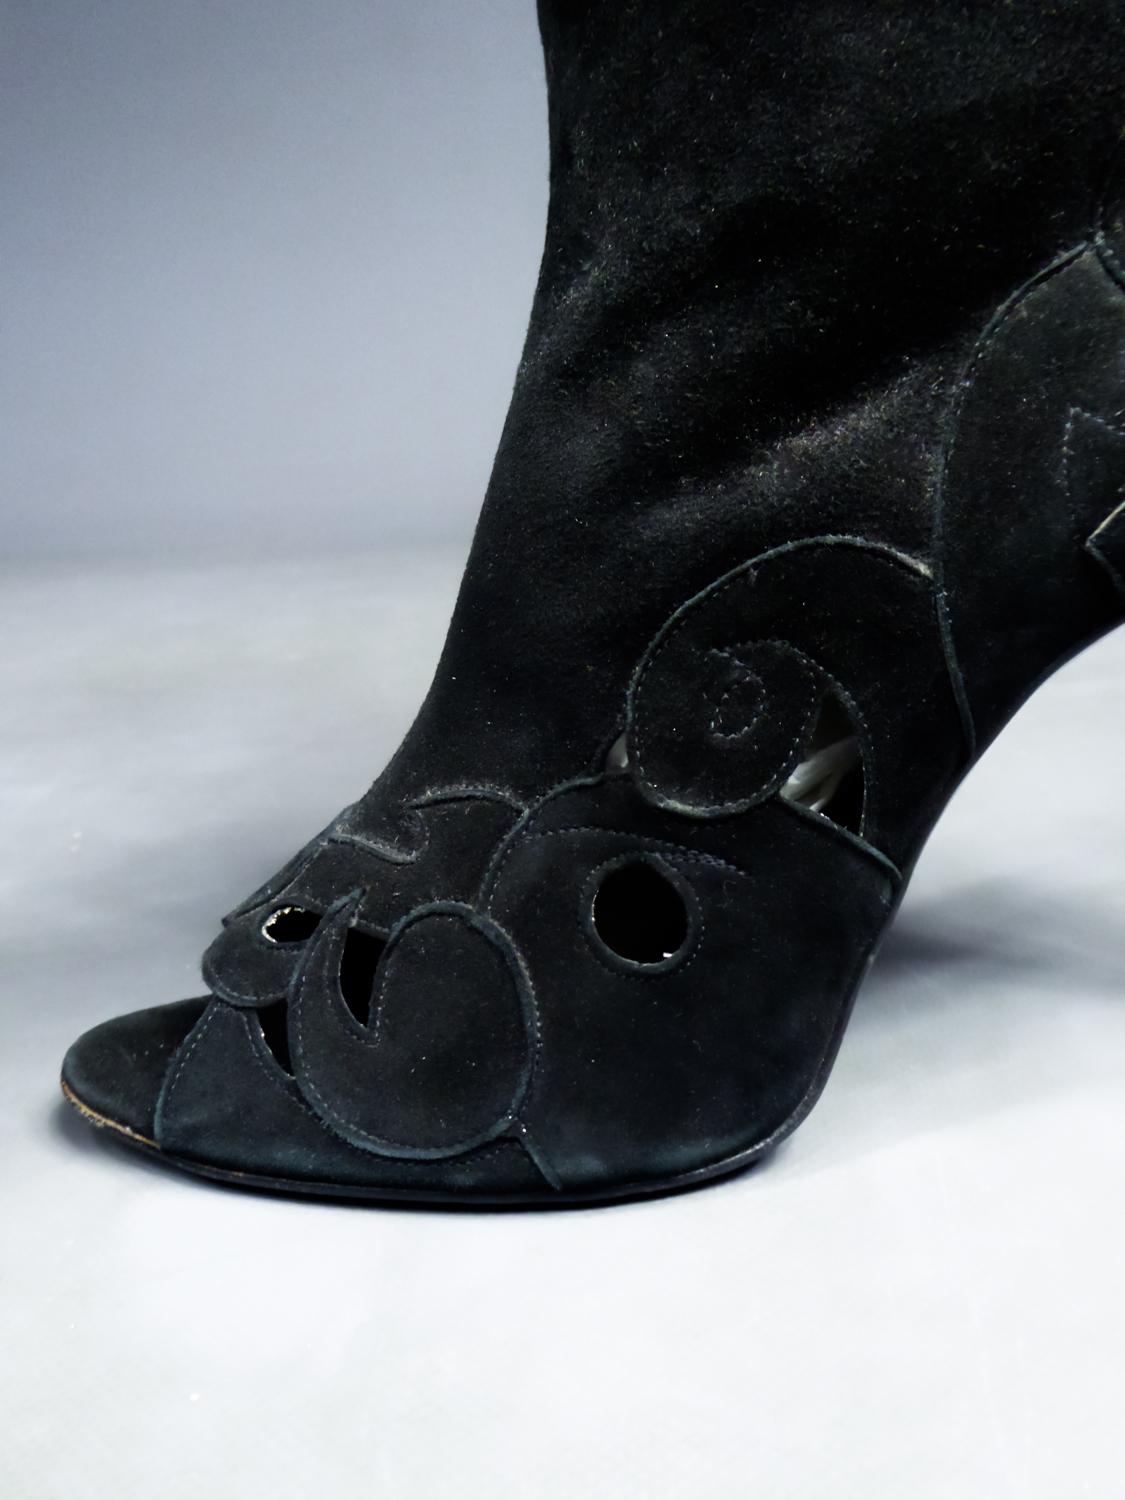 Gianni Versace Boots in Suede and Swarovski Rhinestone Circa 2000 For Sale 1